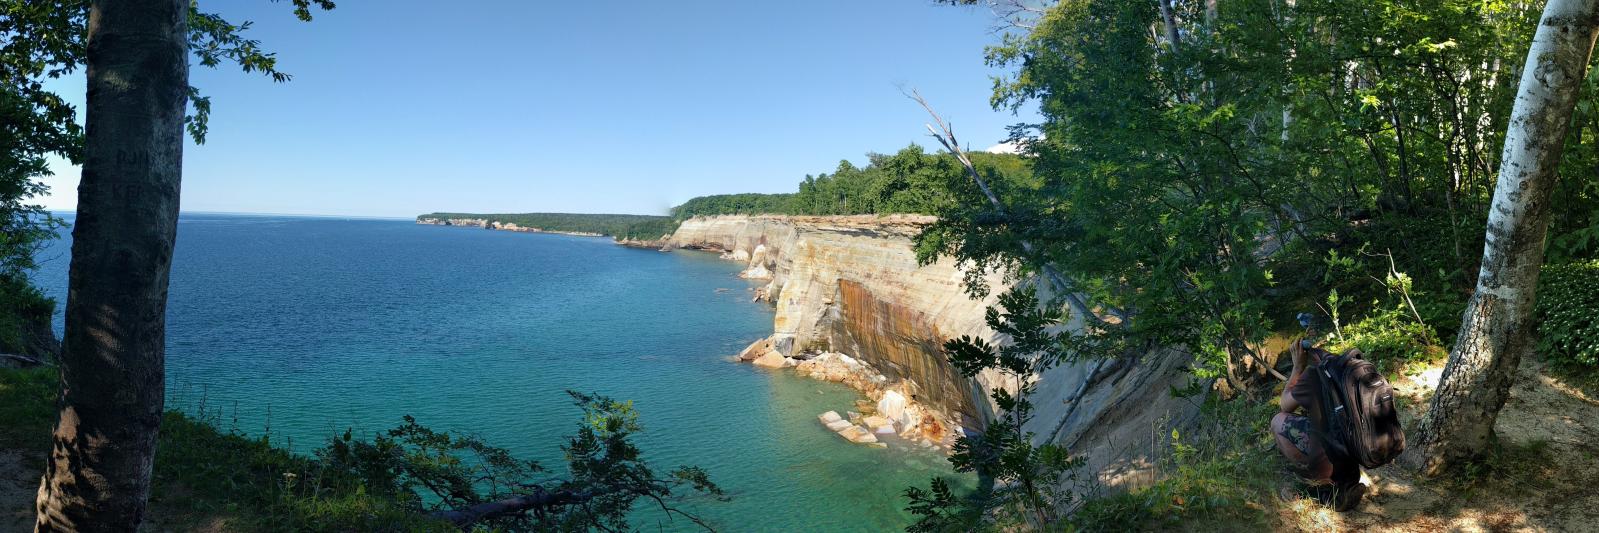 Michigan: Pictured Rocks and Lake Superior 